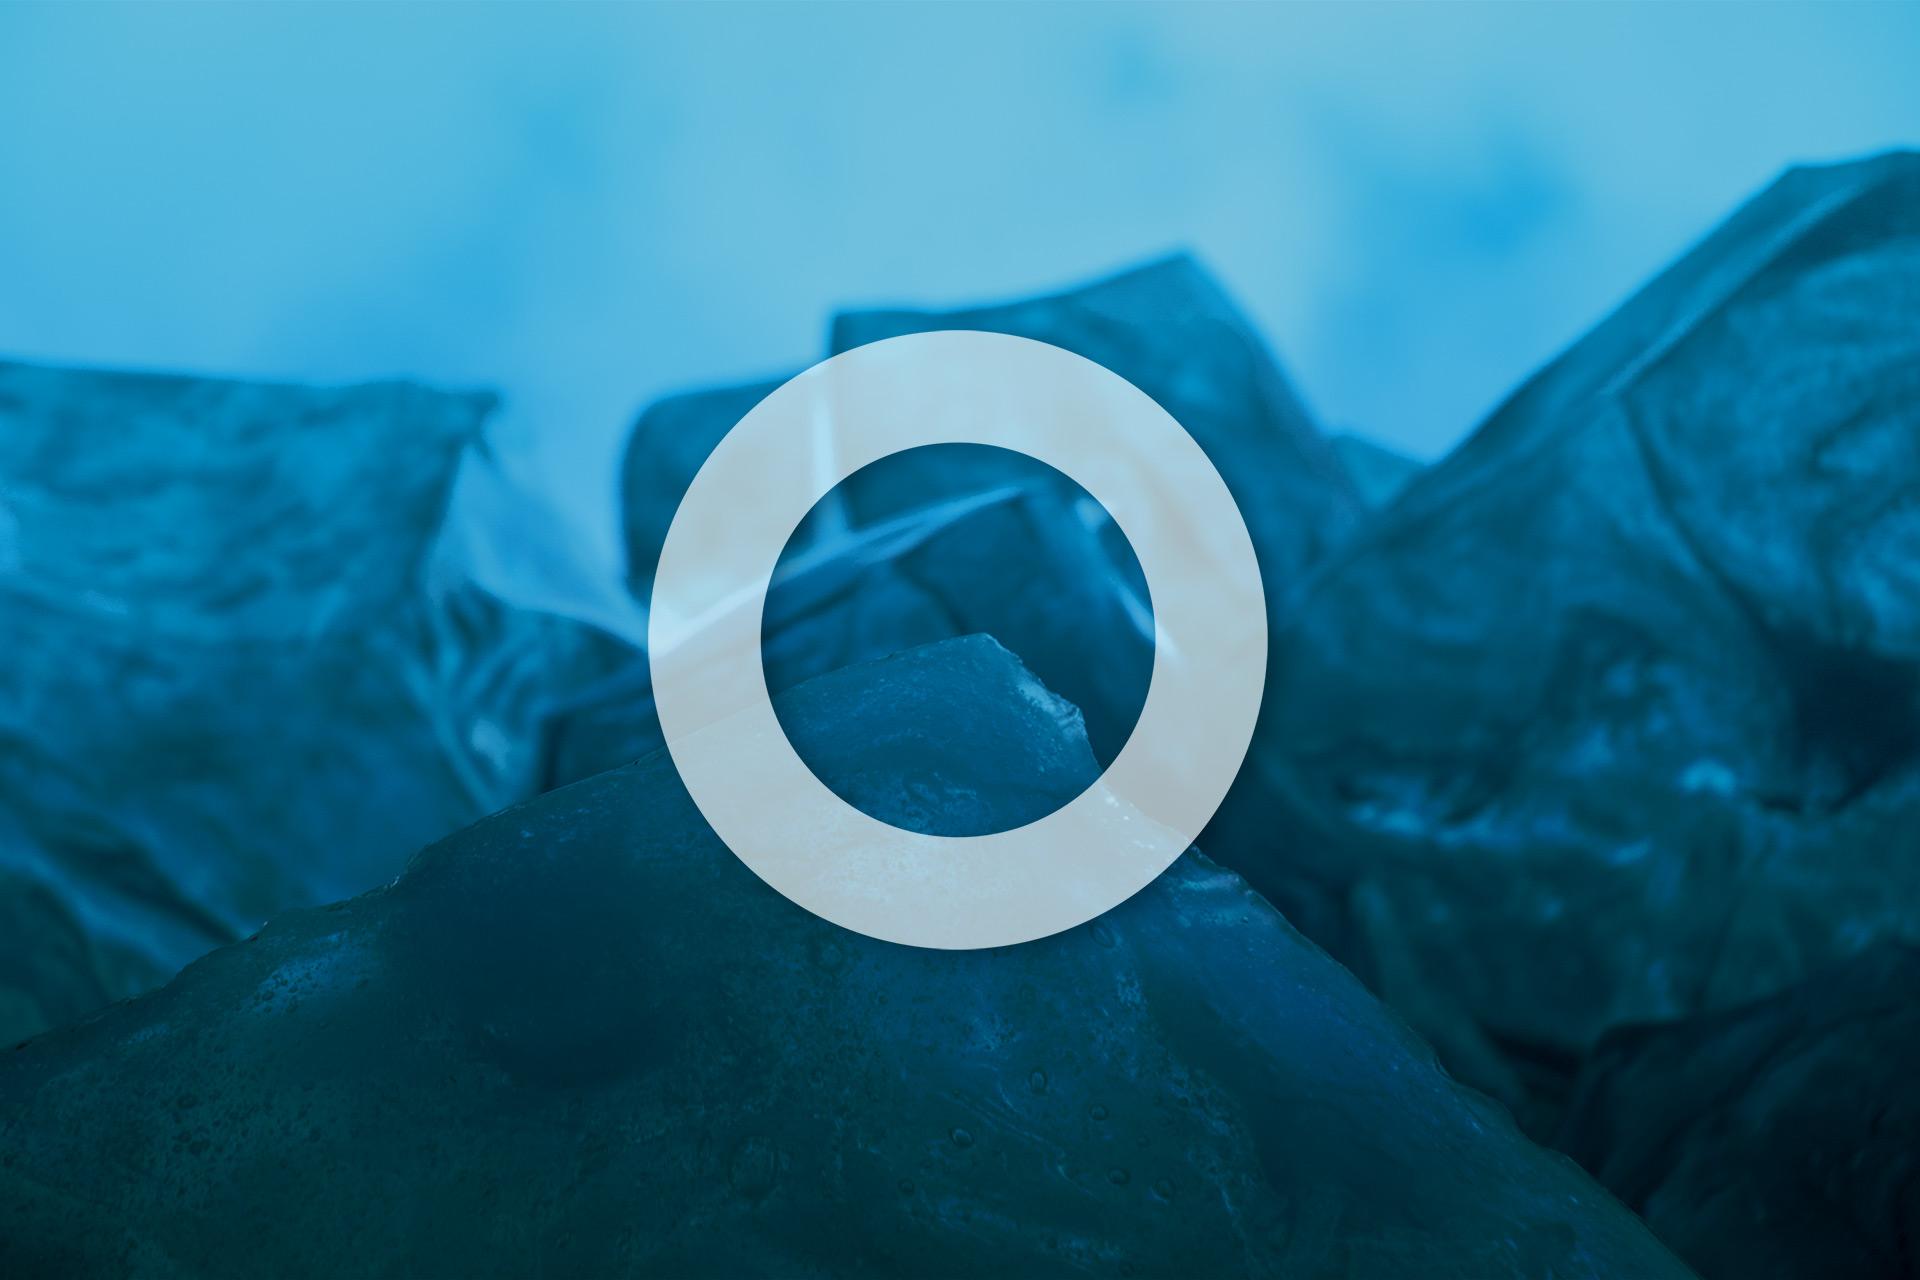 download cyanogenmod gcam